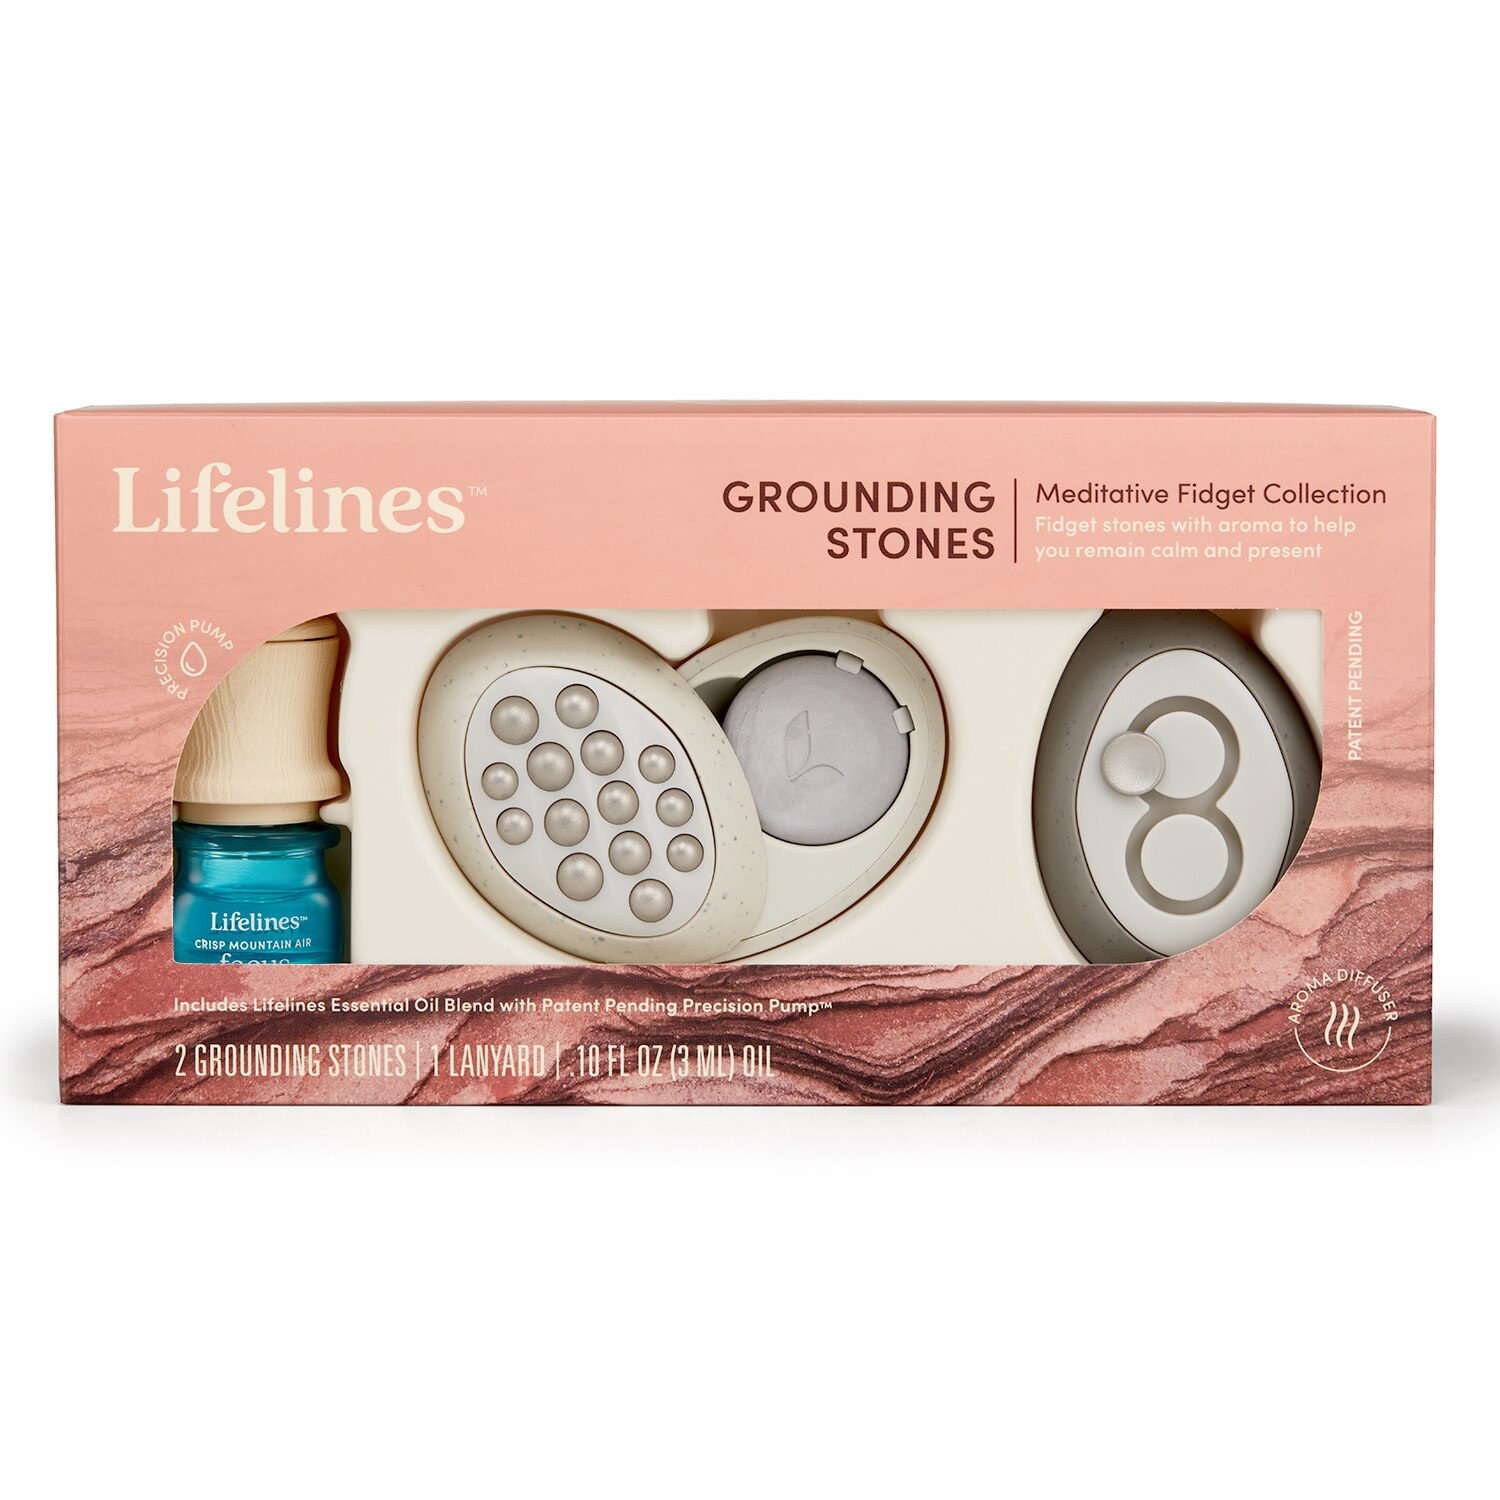 Lifelines Grounding Stones - Meditative Fidget Collection Plus Essential Oil Blend - 1 , CVS